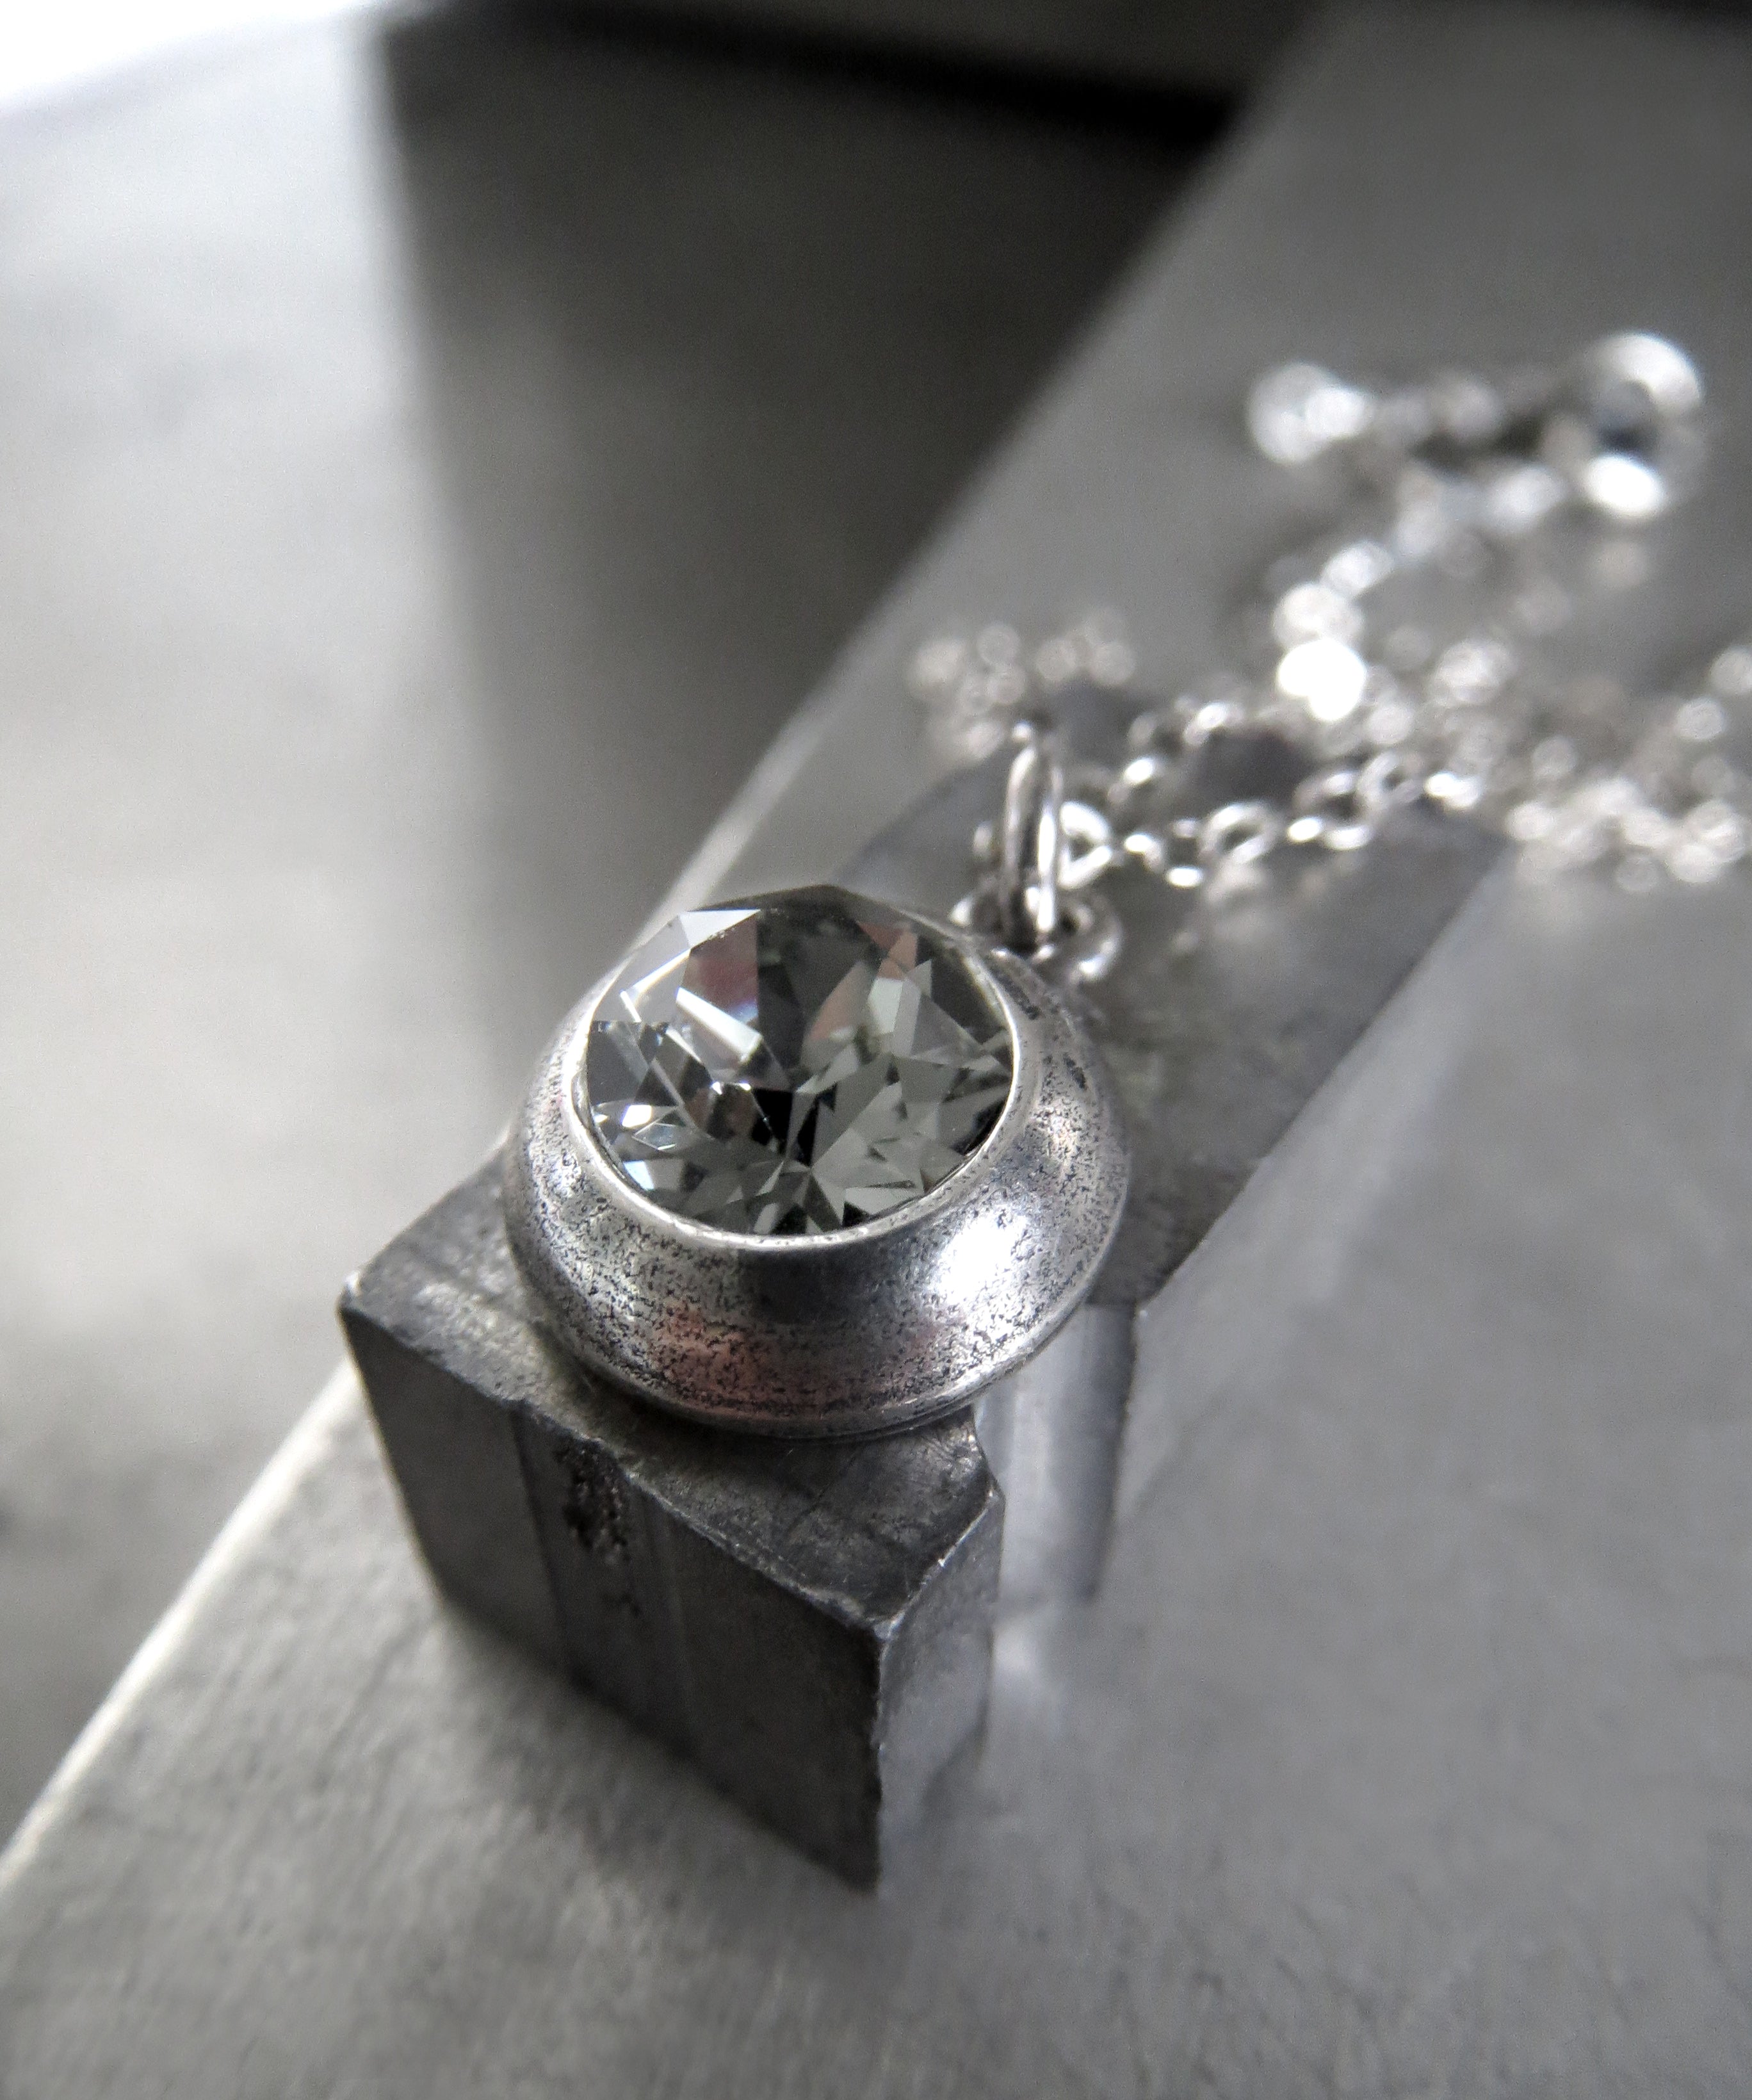 Ultra Modern Minimalist Crystal Necklace and Earring Set - Black Diamond